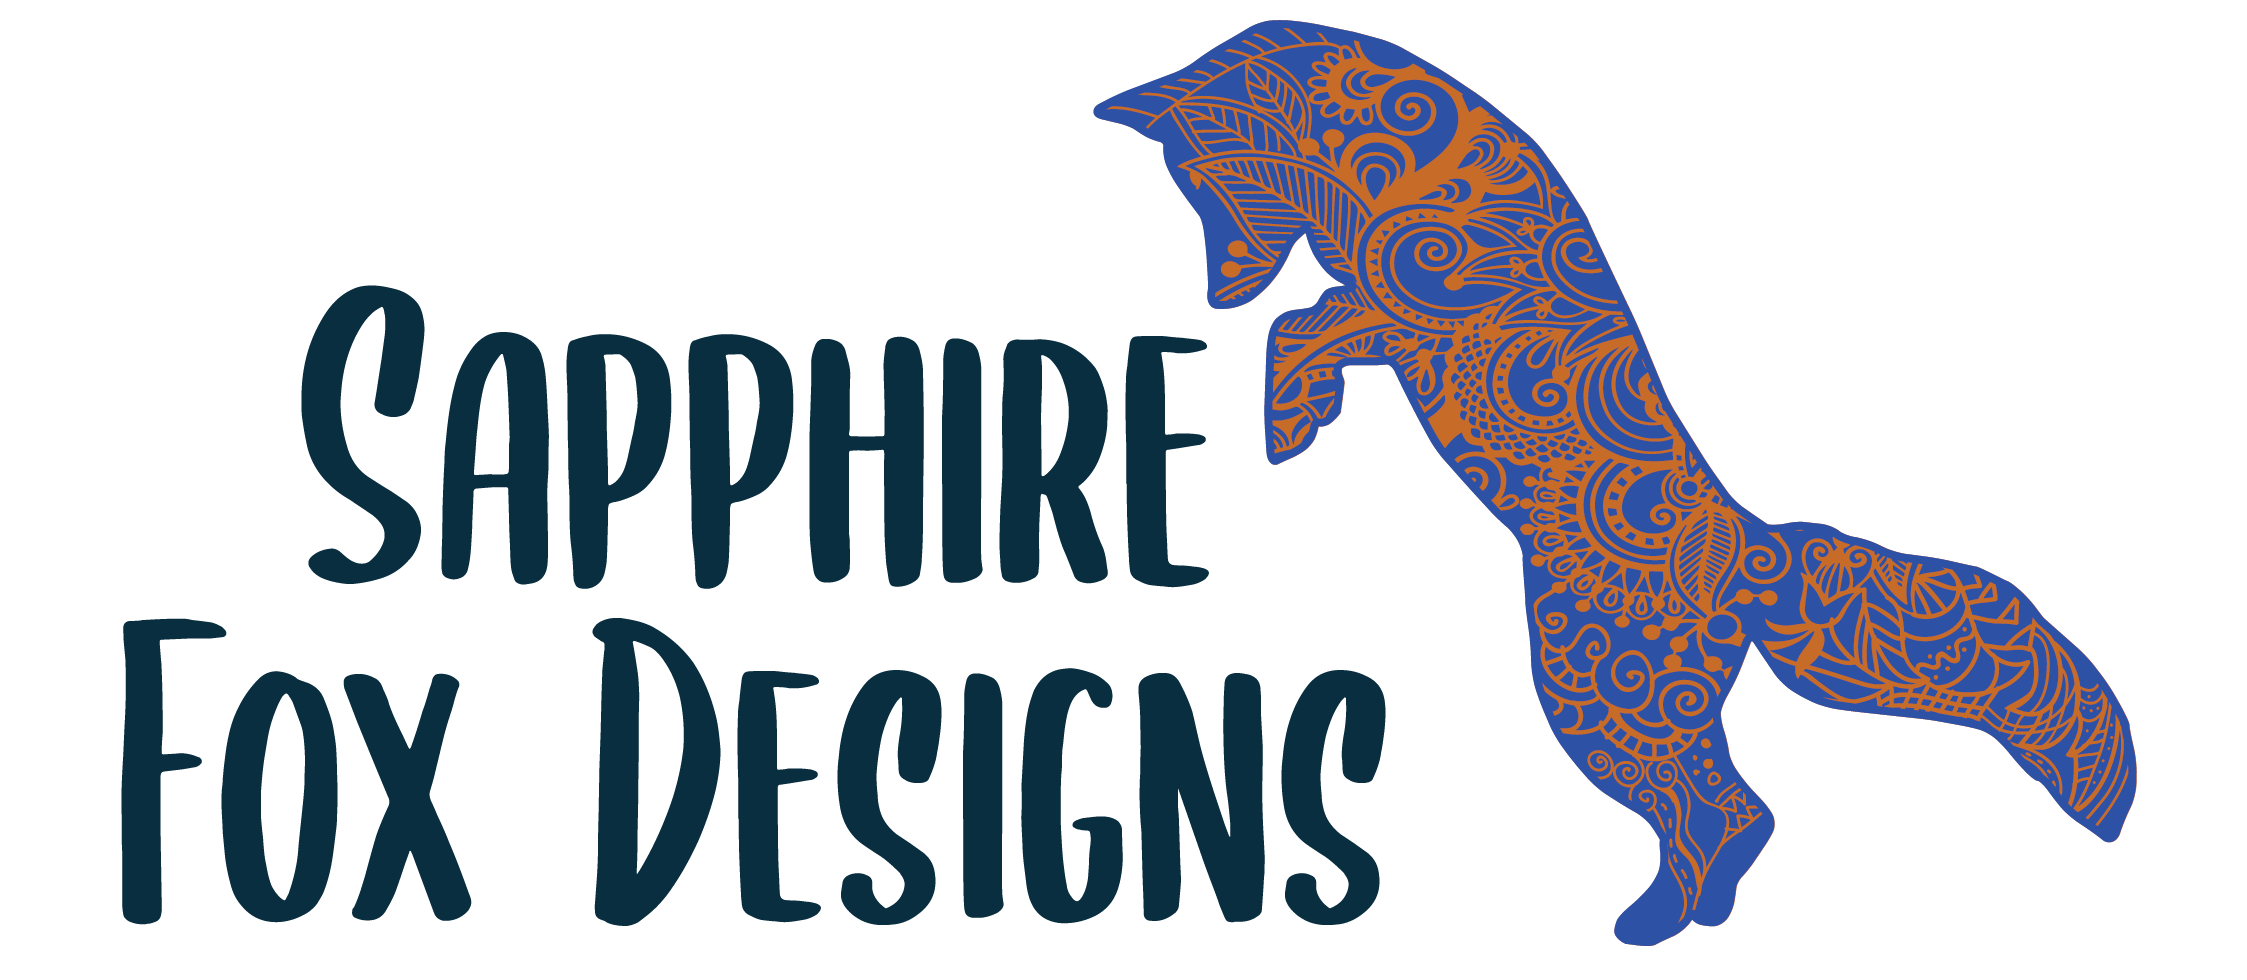 Sapphire Fox Designs